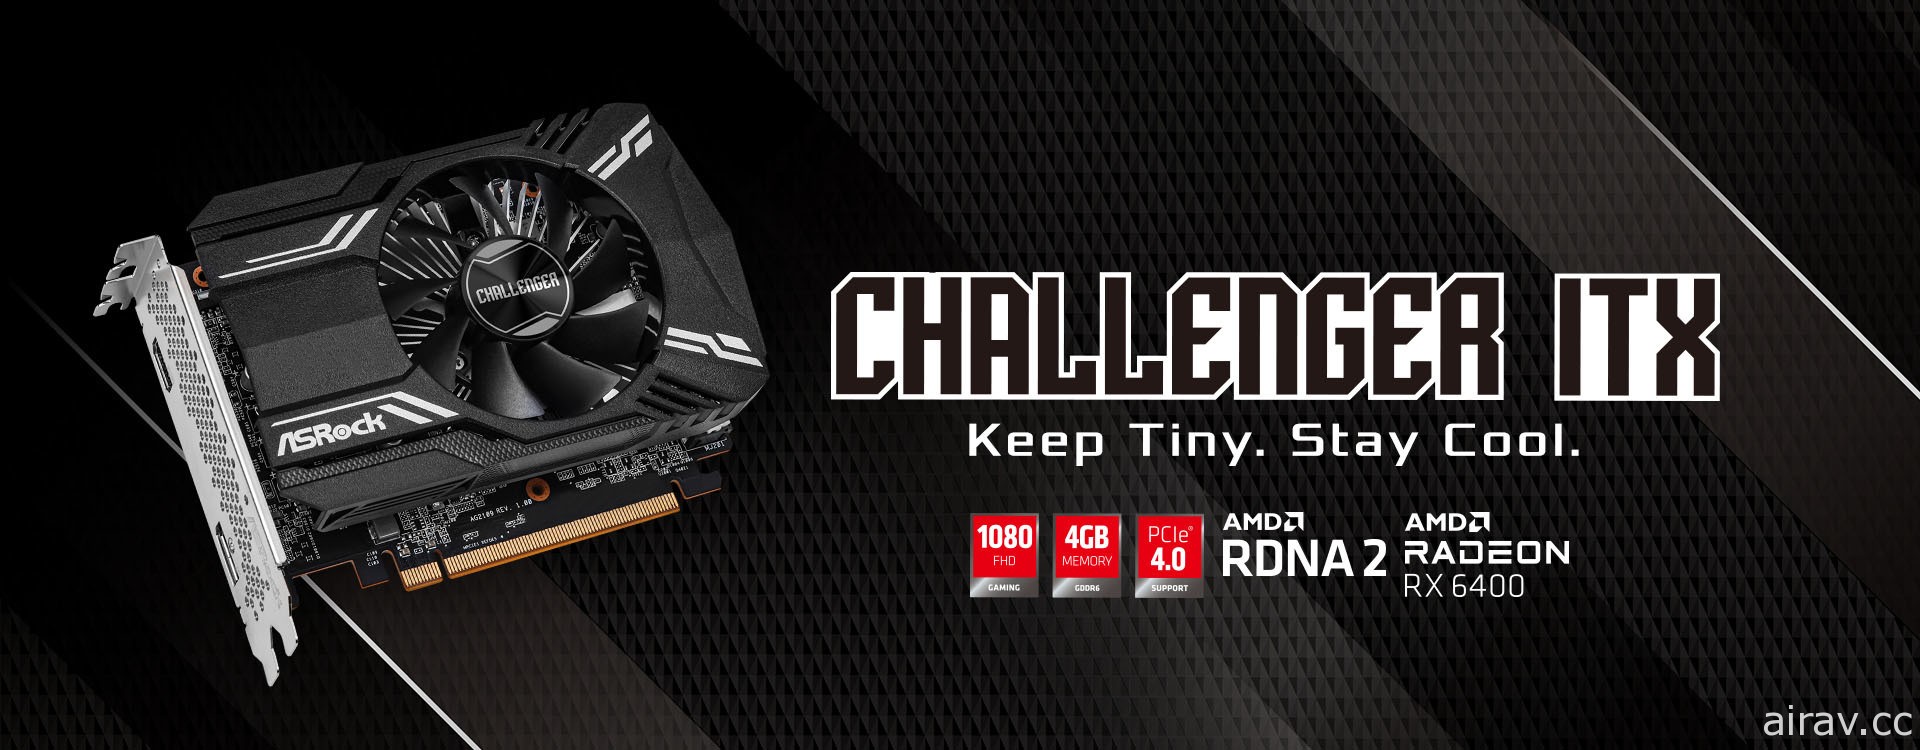 華擎科技公開 AMD Radeon RX 6400 Challenger ITX 4GB 顯示卡